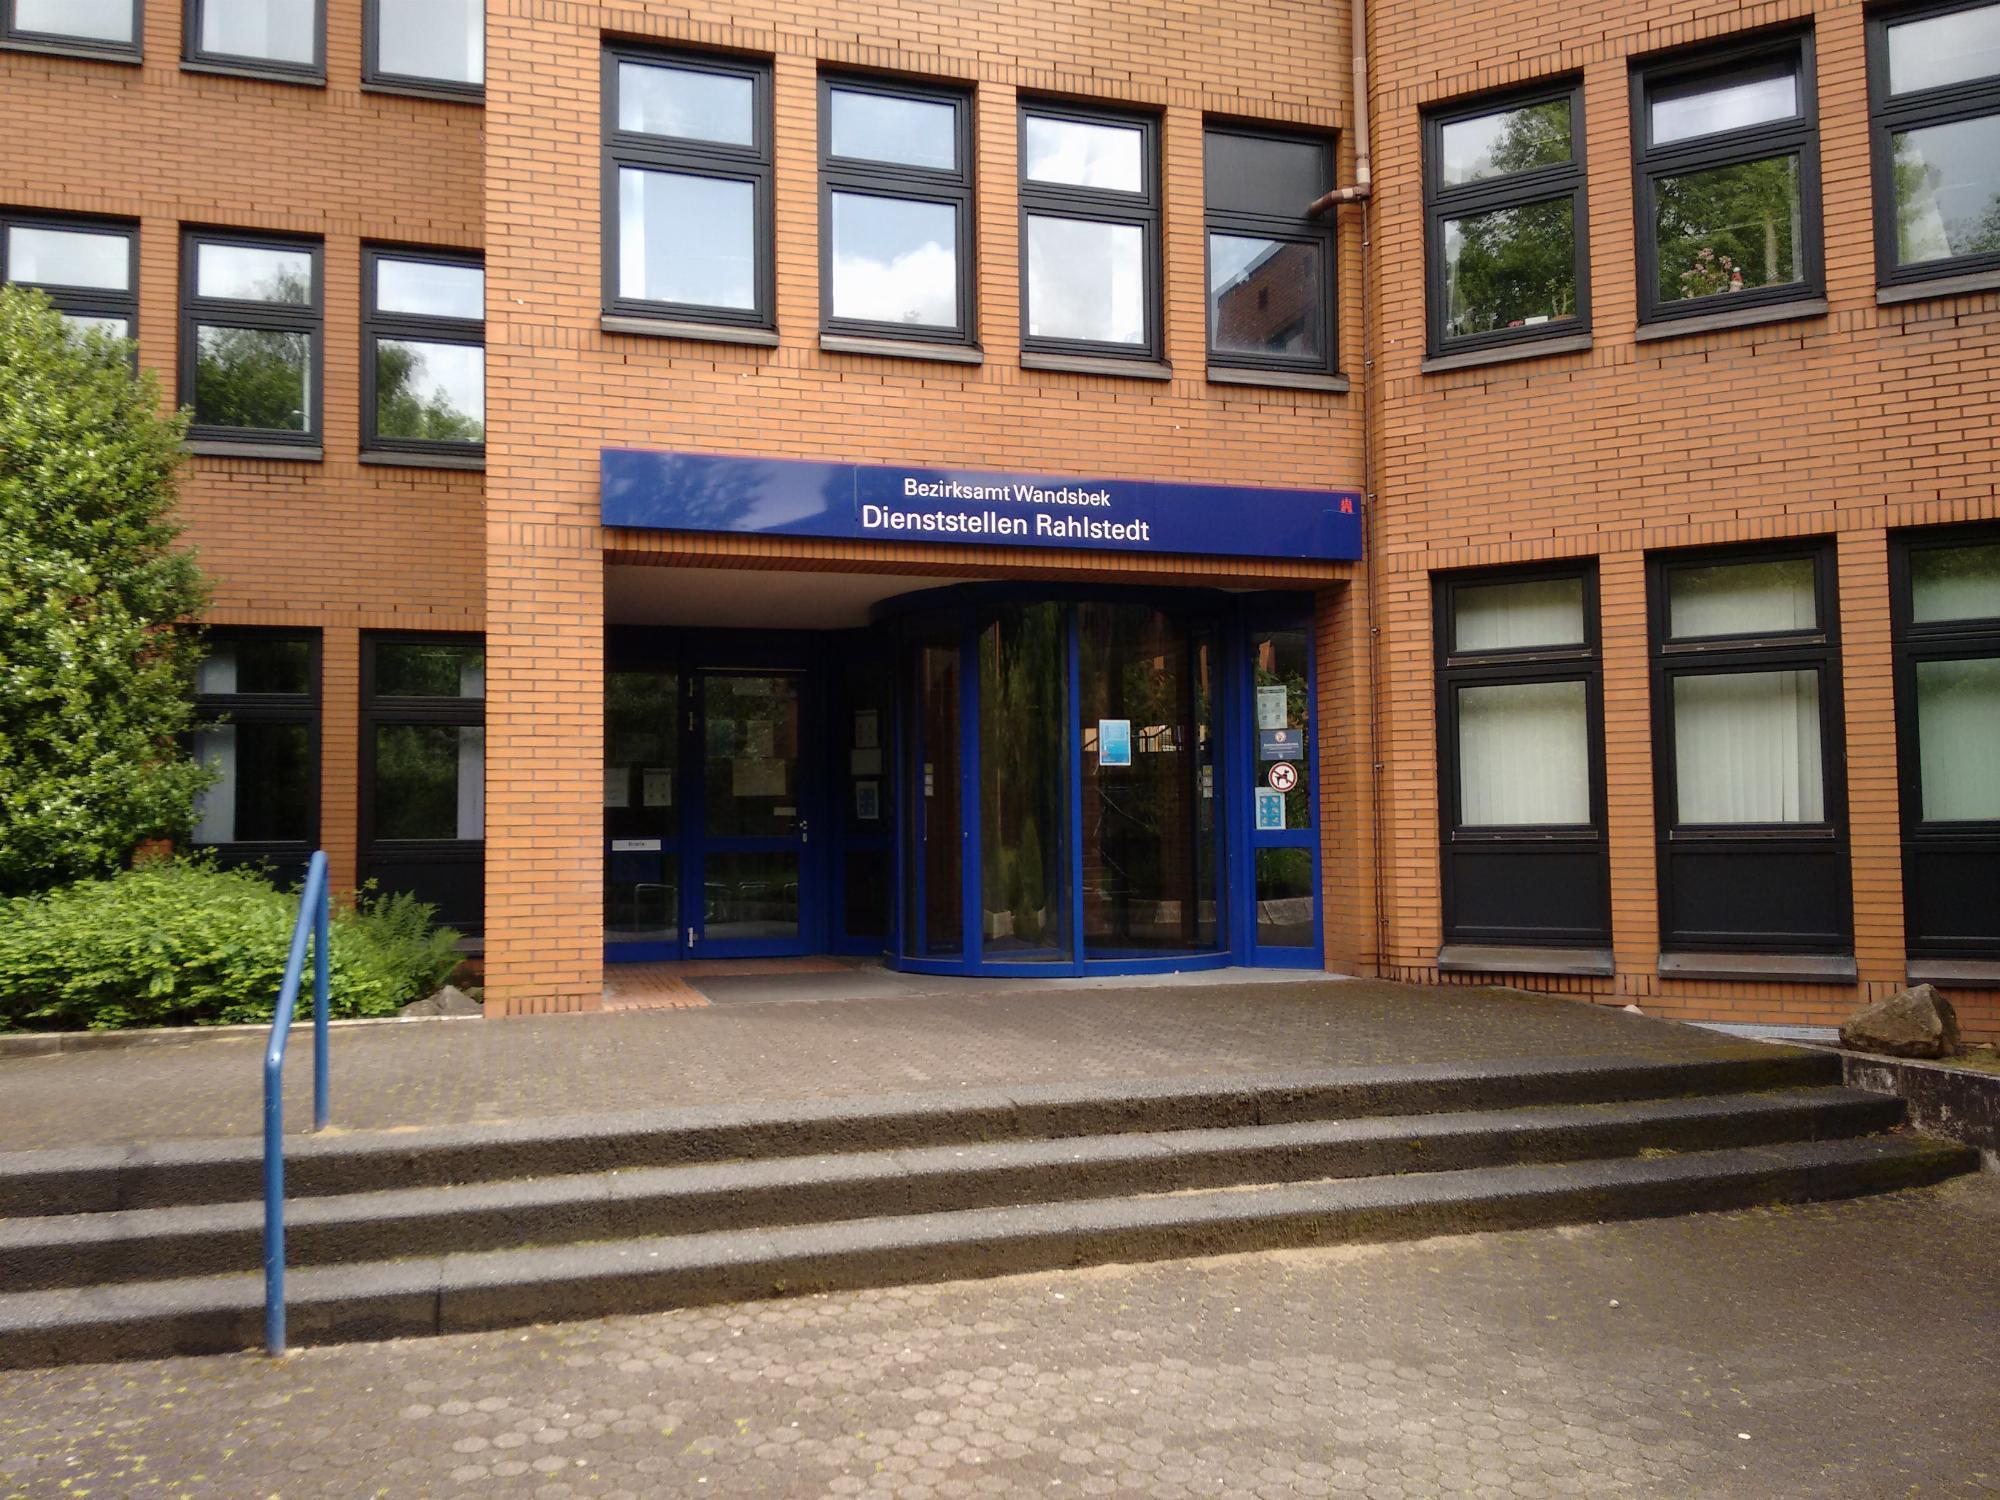 Kundenzentrum Rahlstedt - Bezirksamt Wandsbek